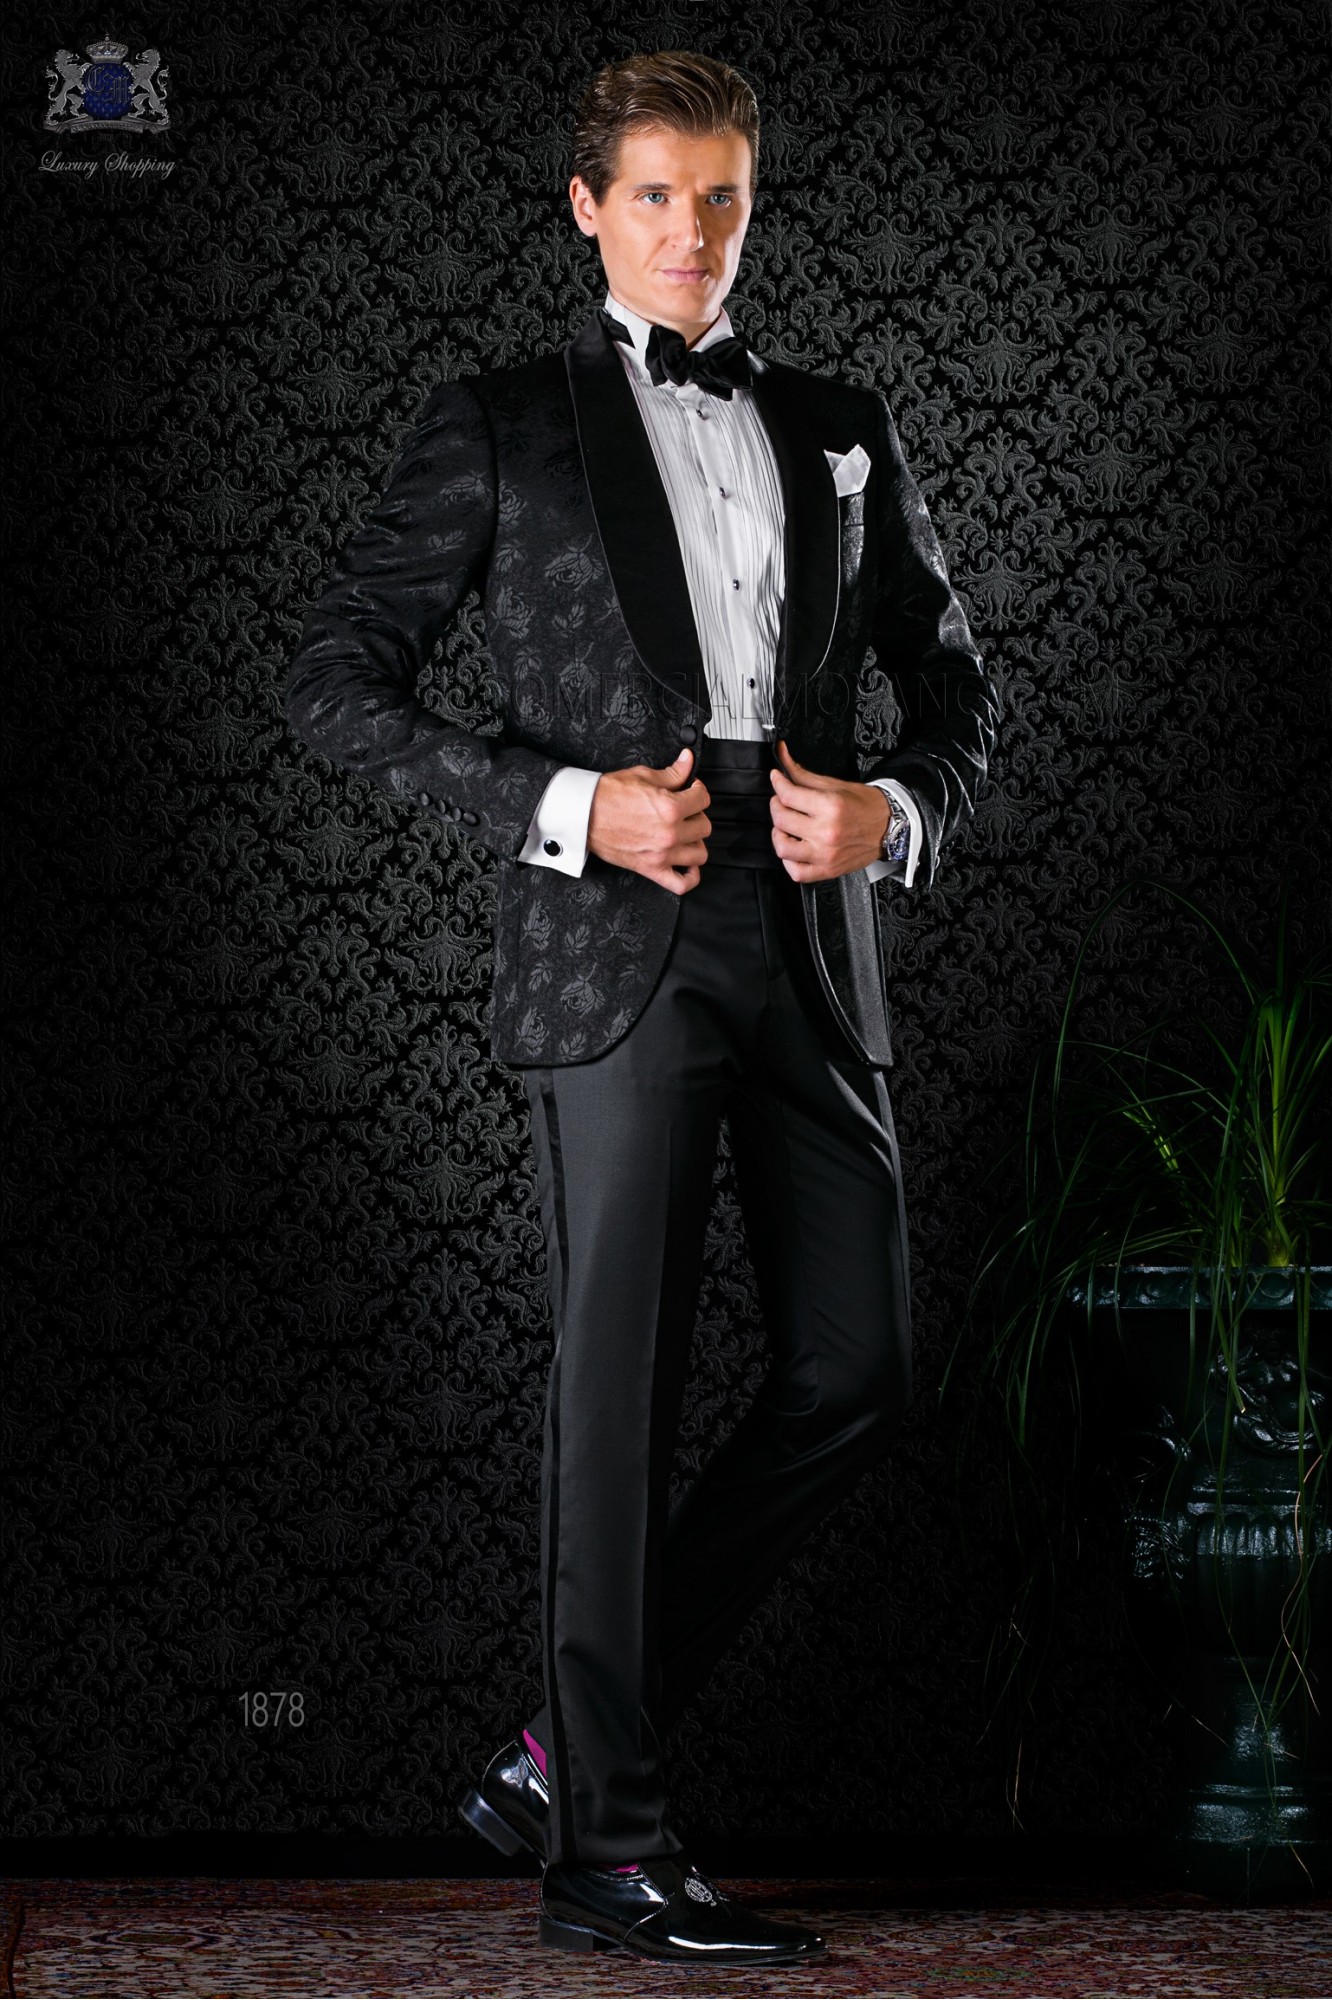 Esmoquin negro en jacquard mixto seda con pantalón negro modelo: 1878 Mario Moyano colección Black Tie